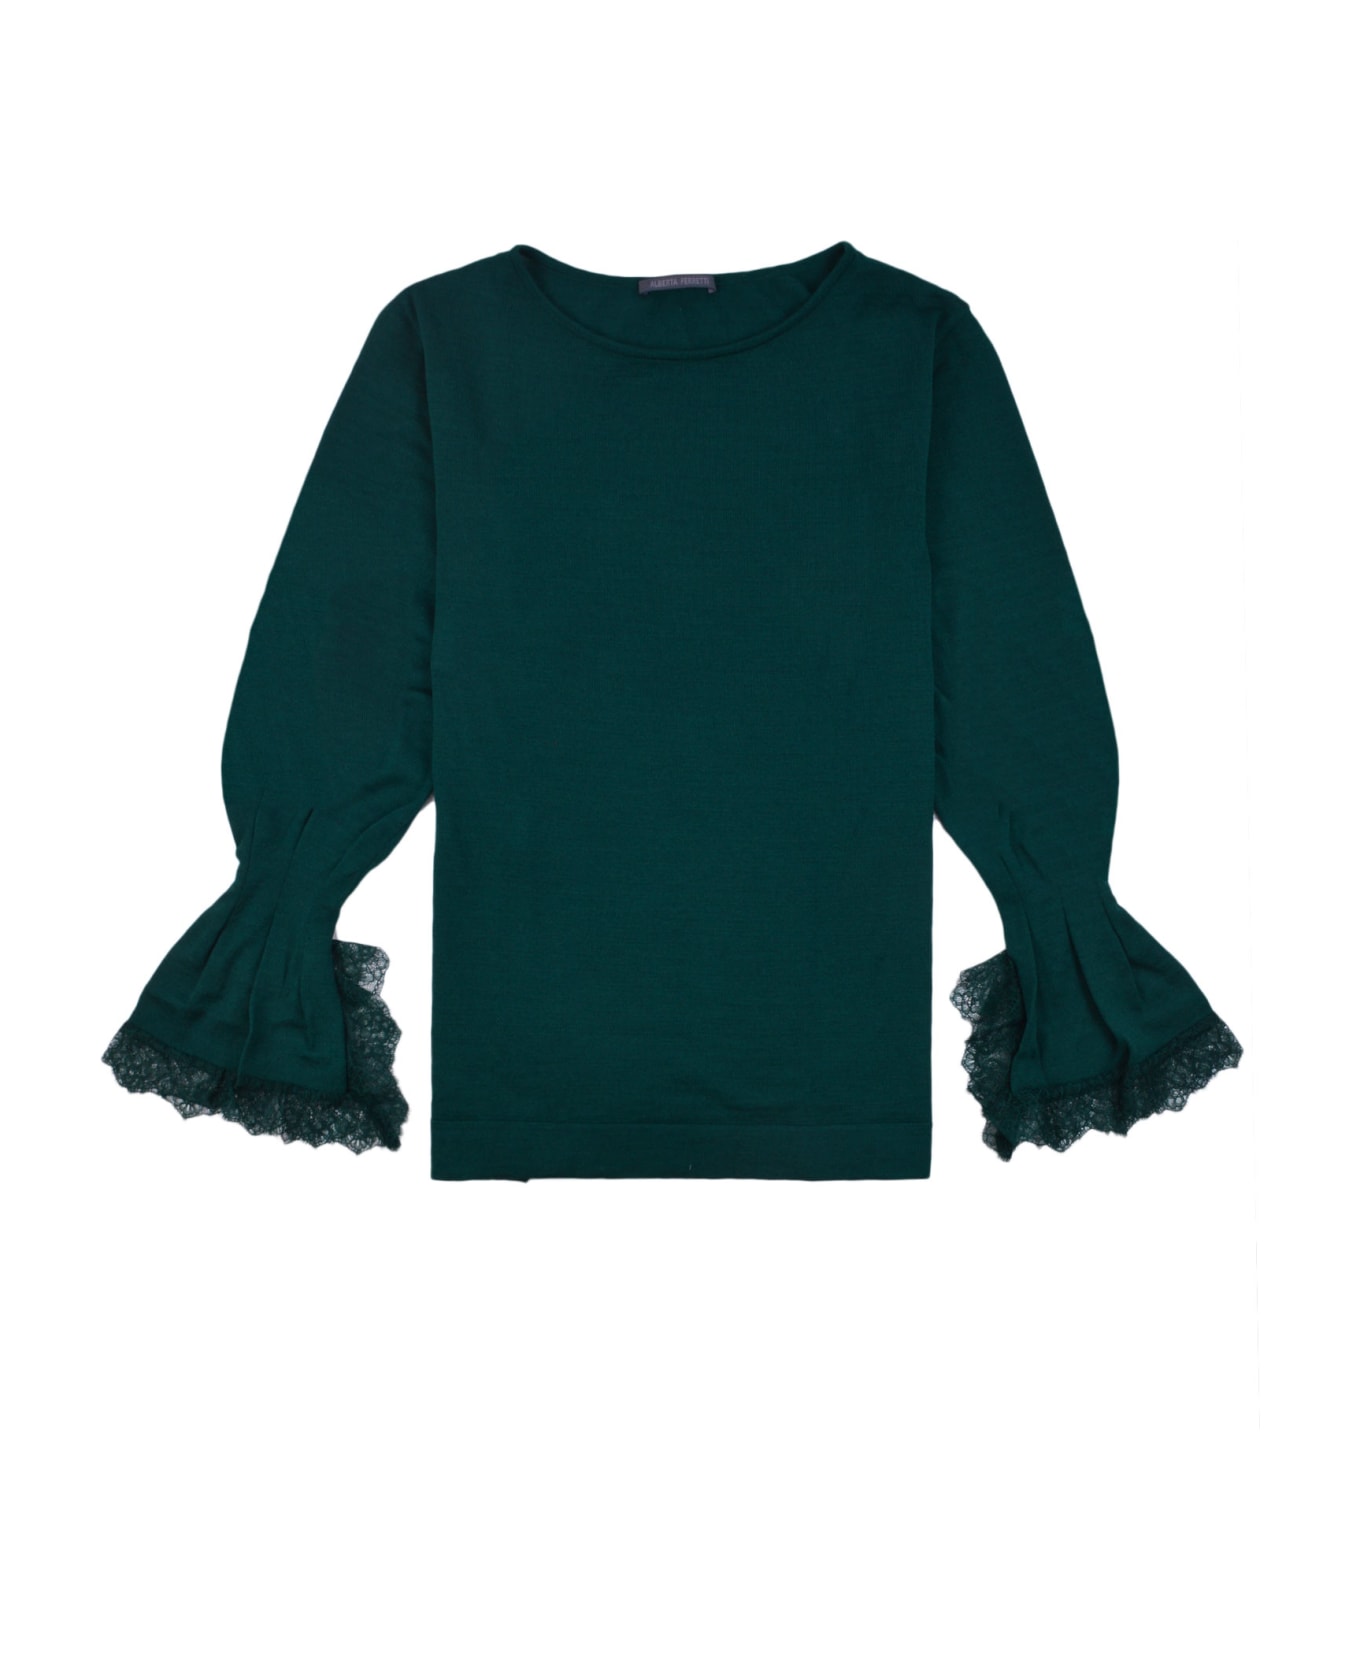 Alberta Ferretti Lace Cuffs Round Neck Plain Sweater - Verdone